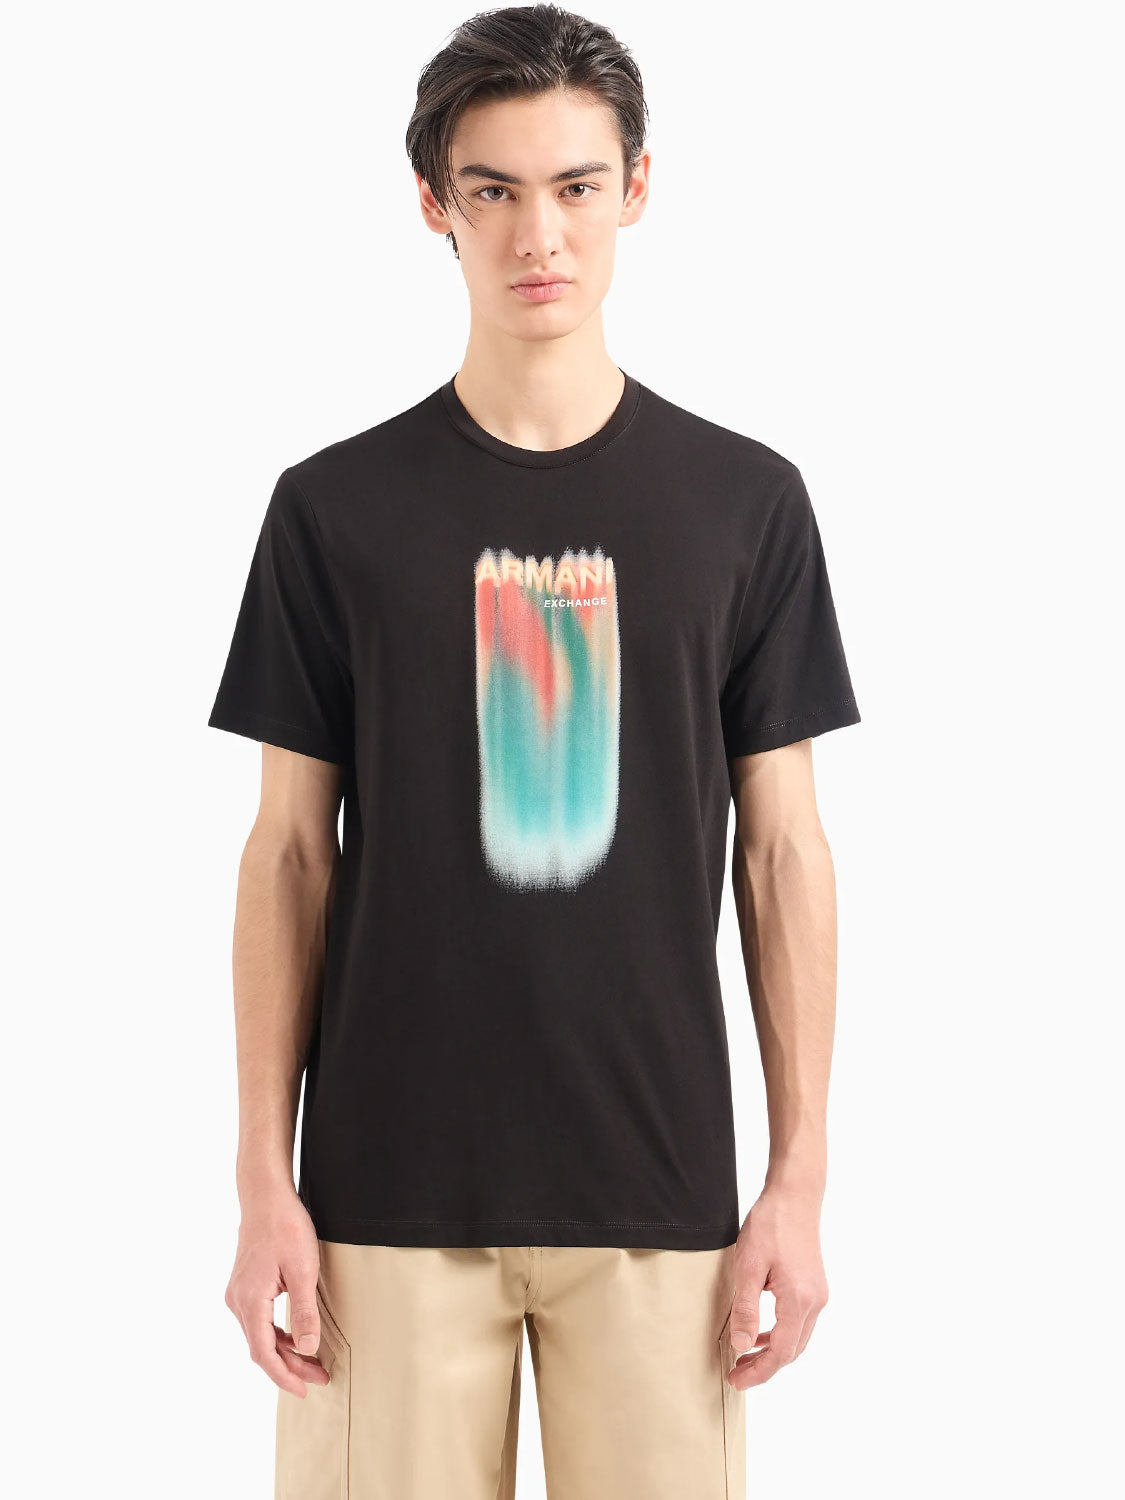 ARMANI EXCHANGE A|X - T-Shirt stampa arcobaleno